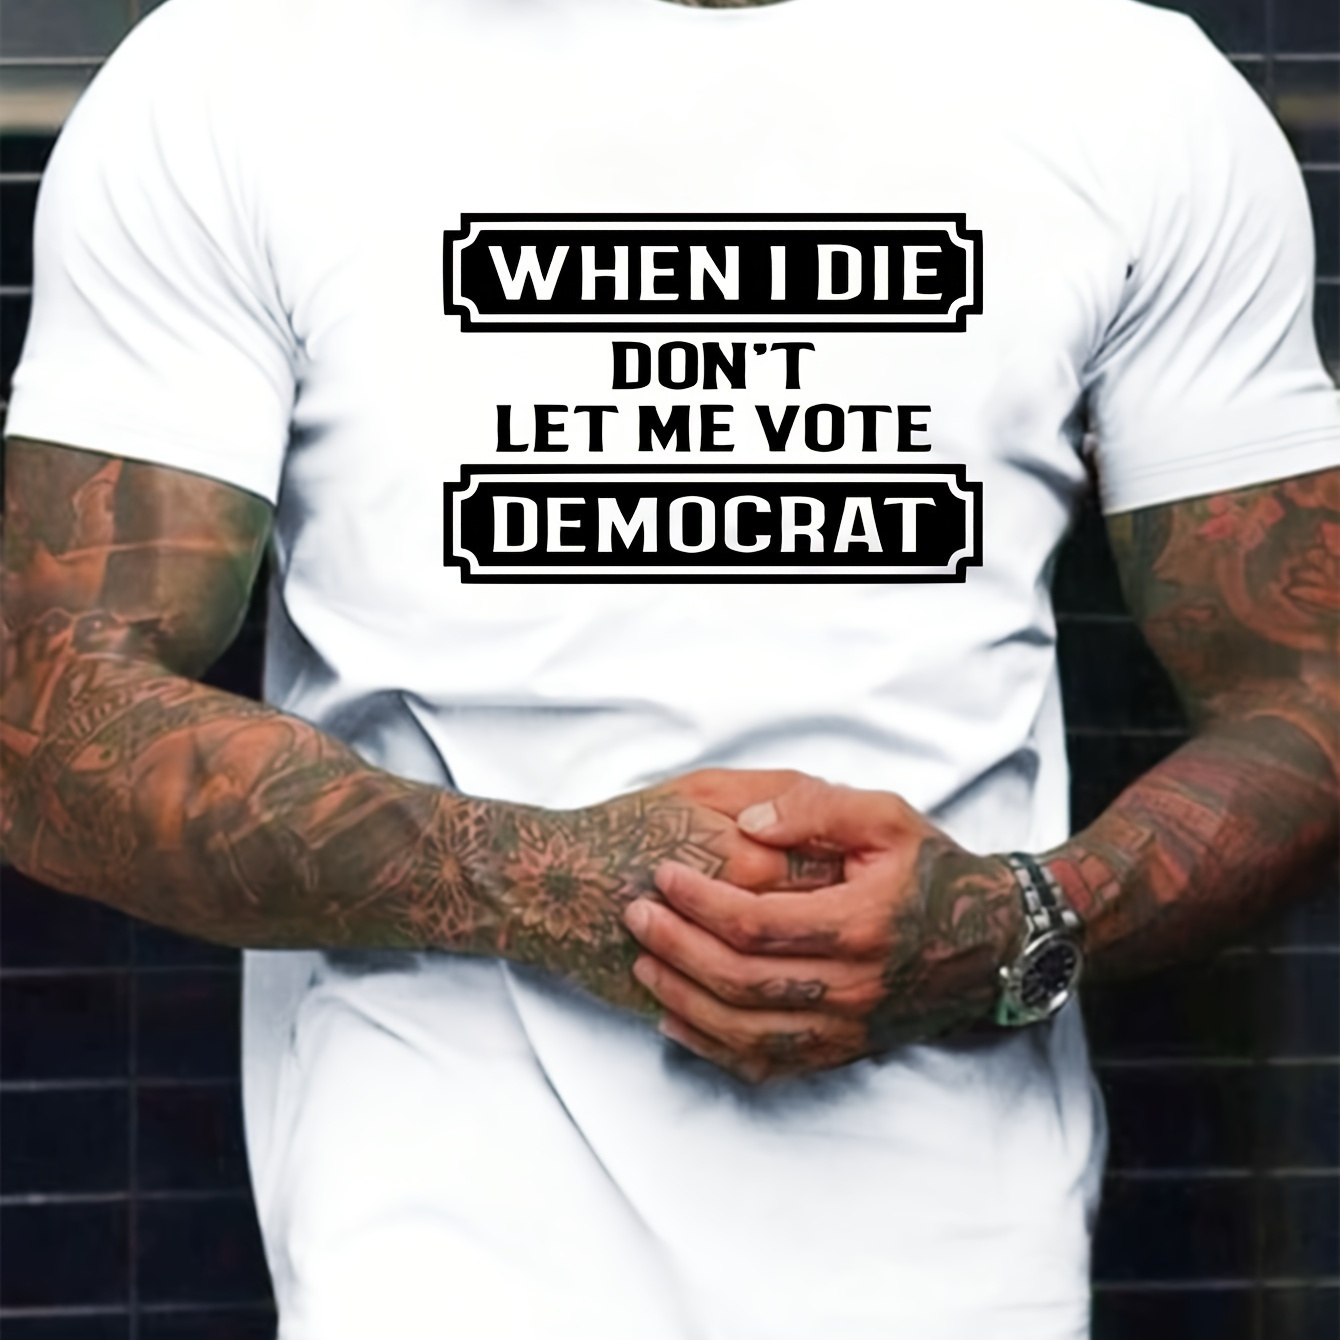 

When I Die Don't Let Me Vote Print Men's Short Sleeve T-shirts, Comfy Casual Elastic Crew Neck Tops For Men's Outdoor Activities